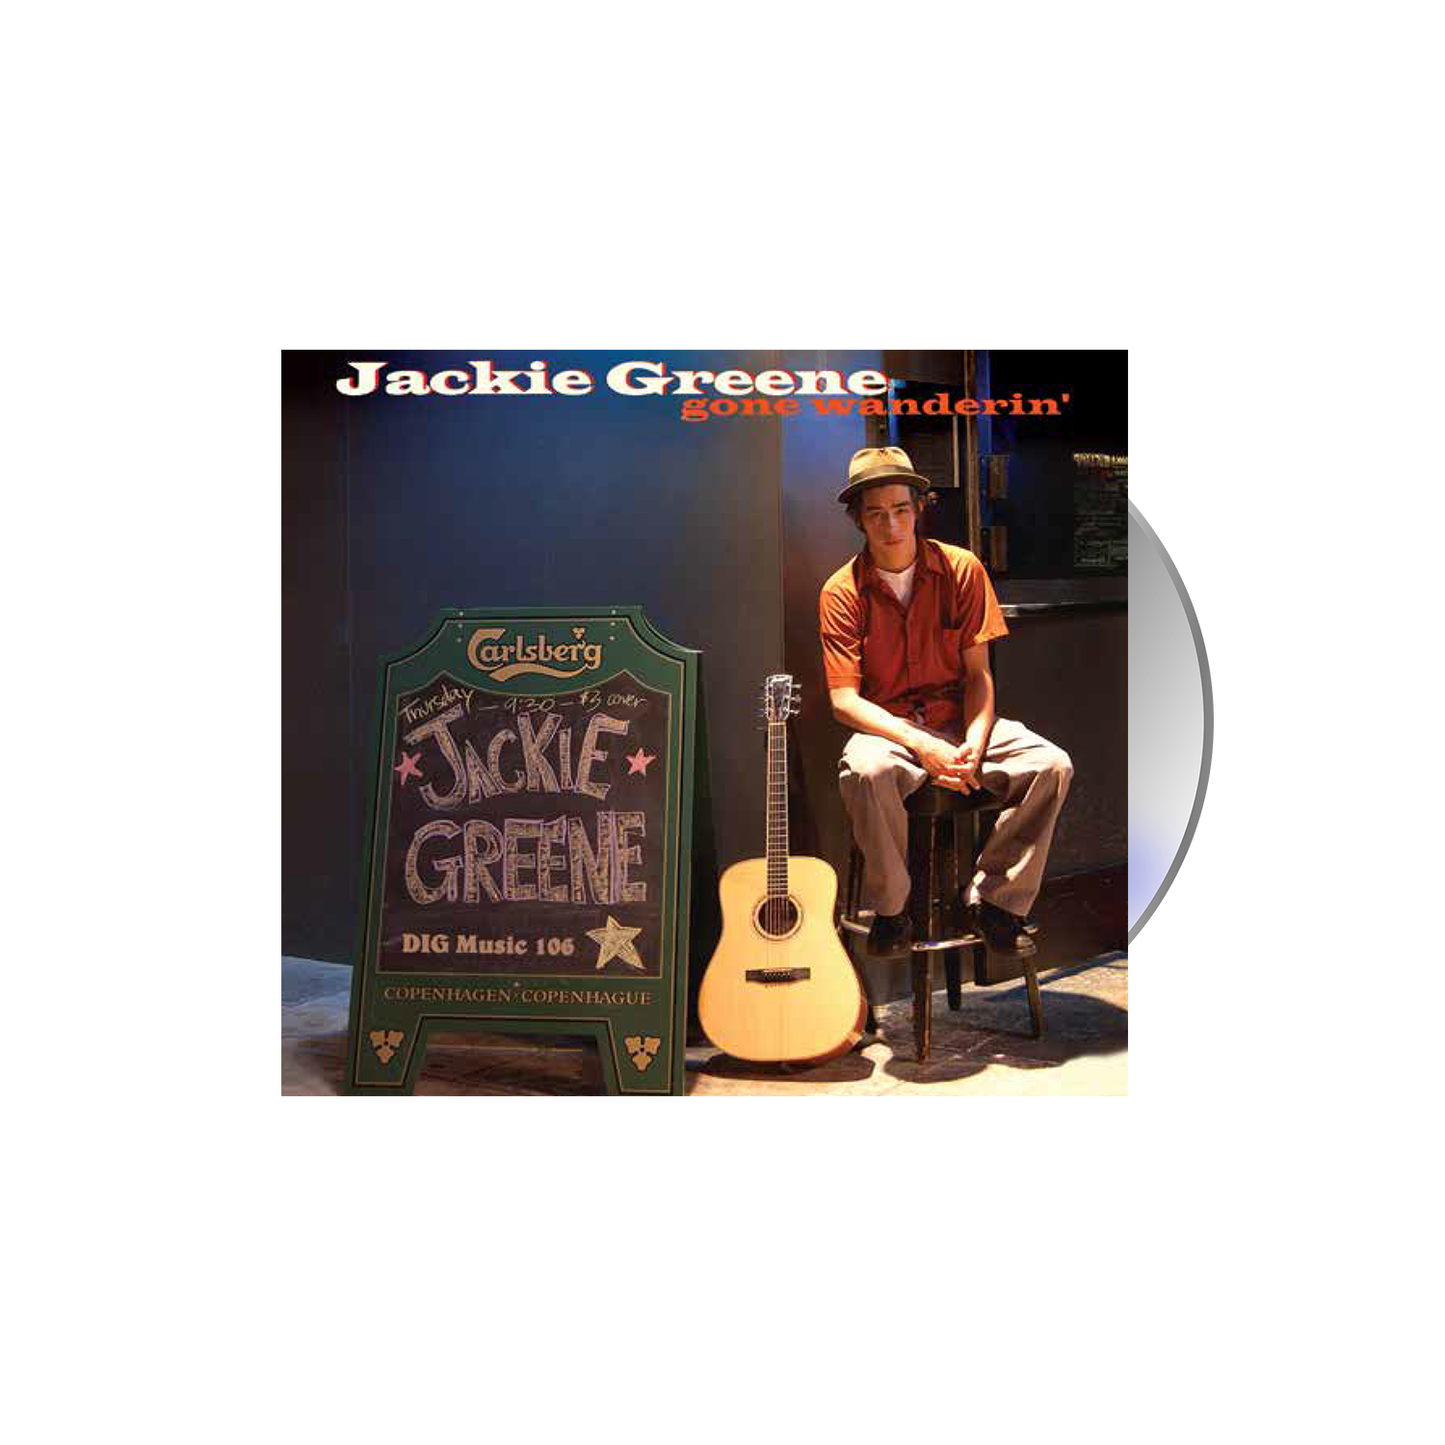 Jackie Greene gone wanderin' CD 2002 blue rose music